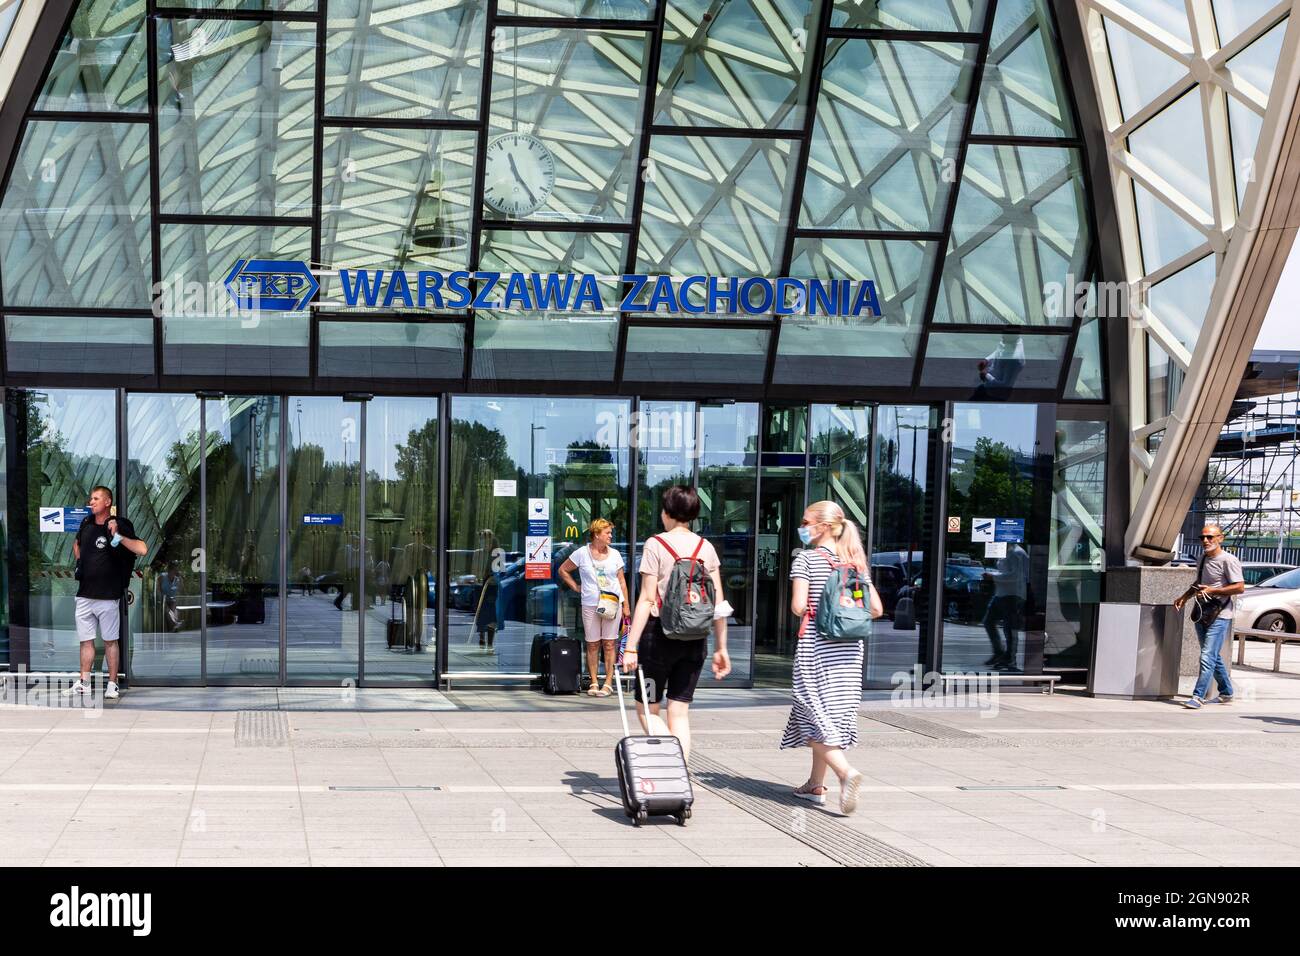 Warsaw, Poland, 09.07.2021. Passengers entering new PKP Warszawa Zachodnia, Warsaw West train and bus station, modern glass building. Stock Photo